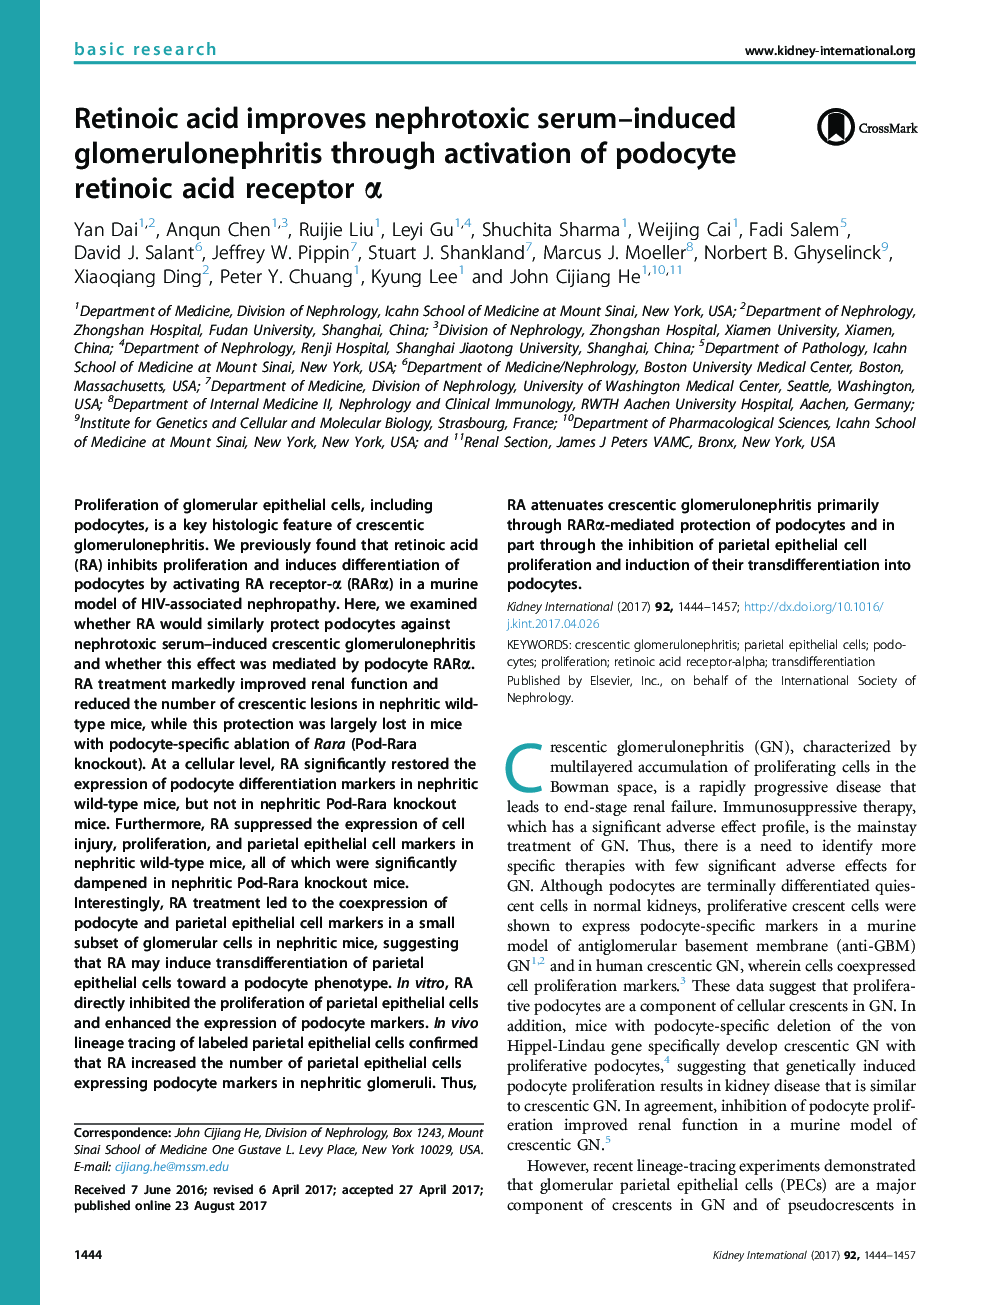 Retinoic acid improves nephrotoxic serum-induced glomerulonephritis through activation of podocyte retinoic acid receptor Î±